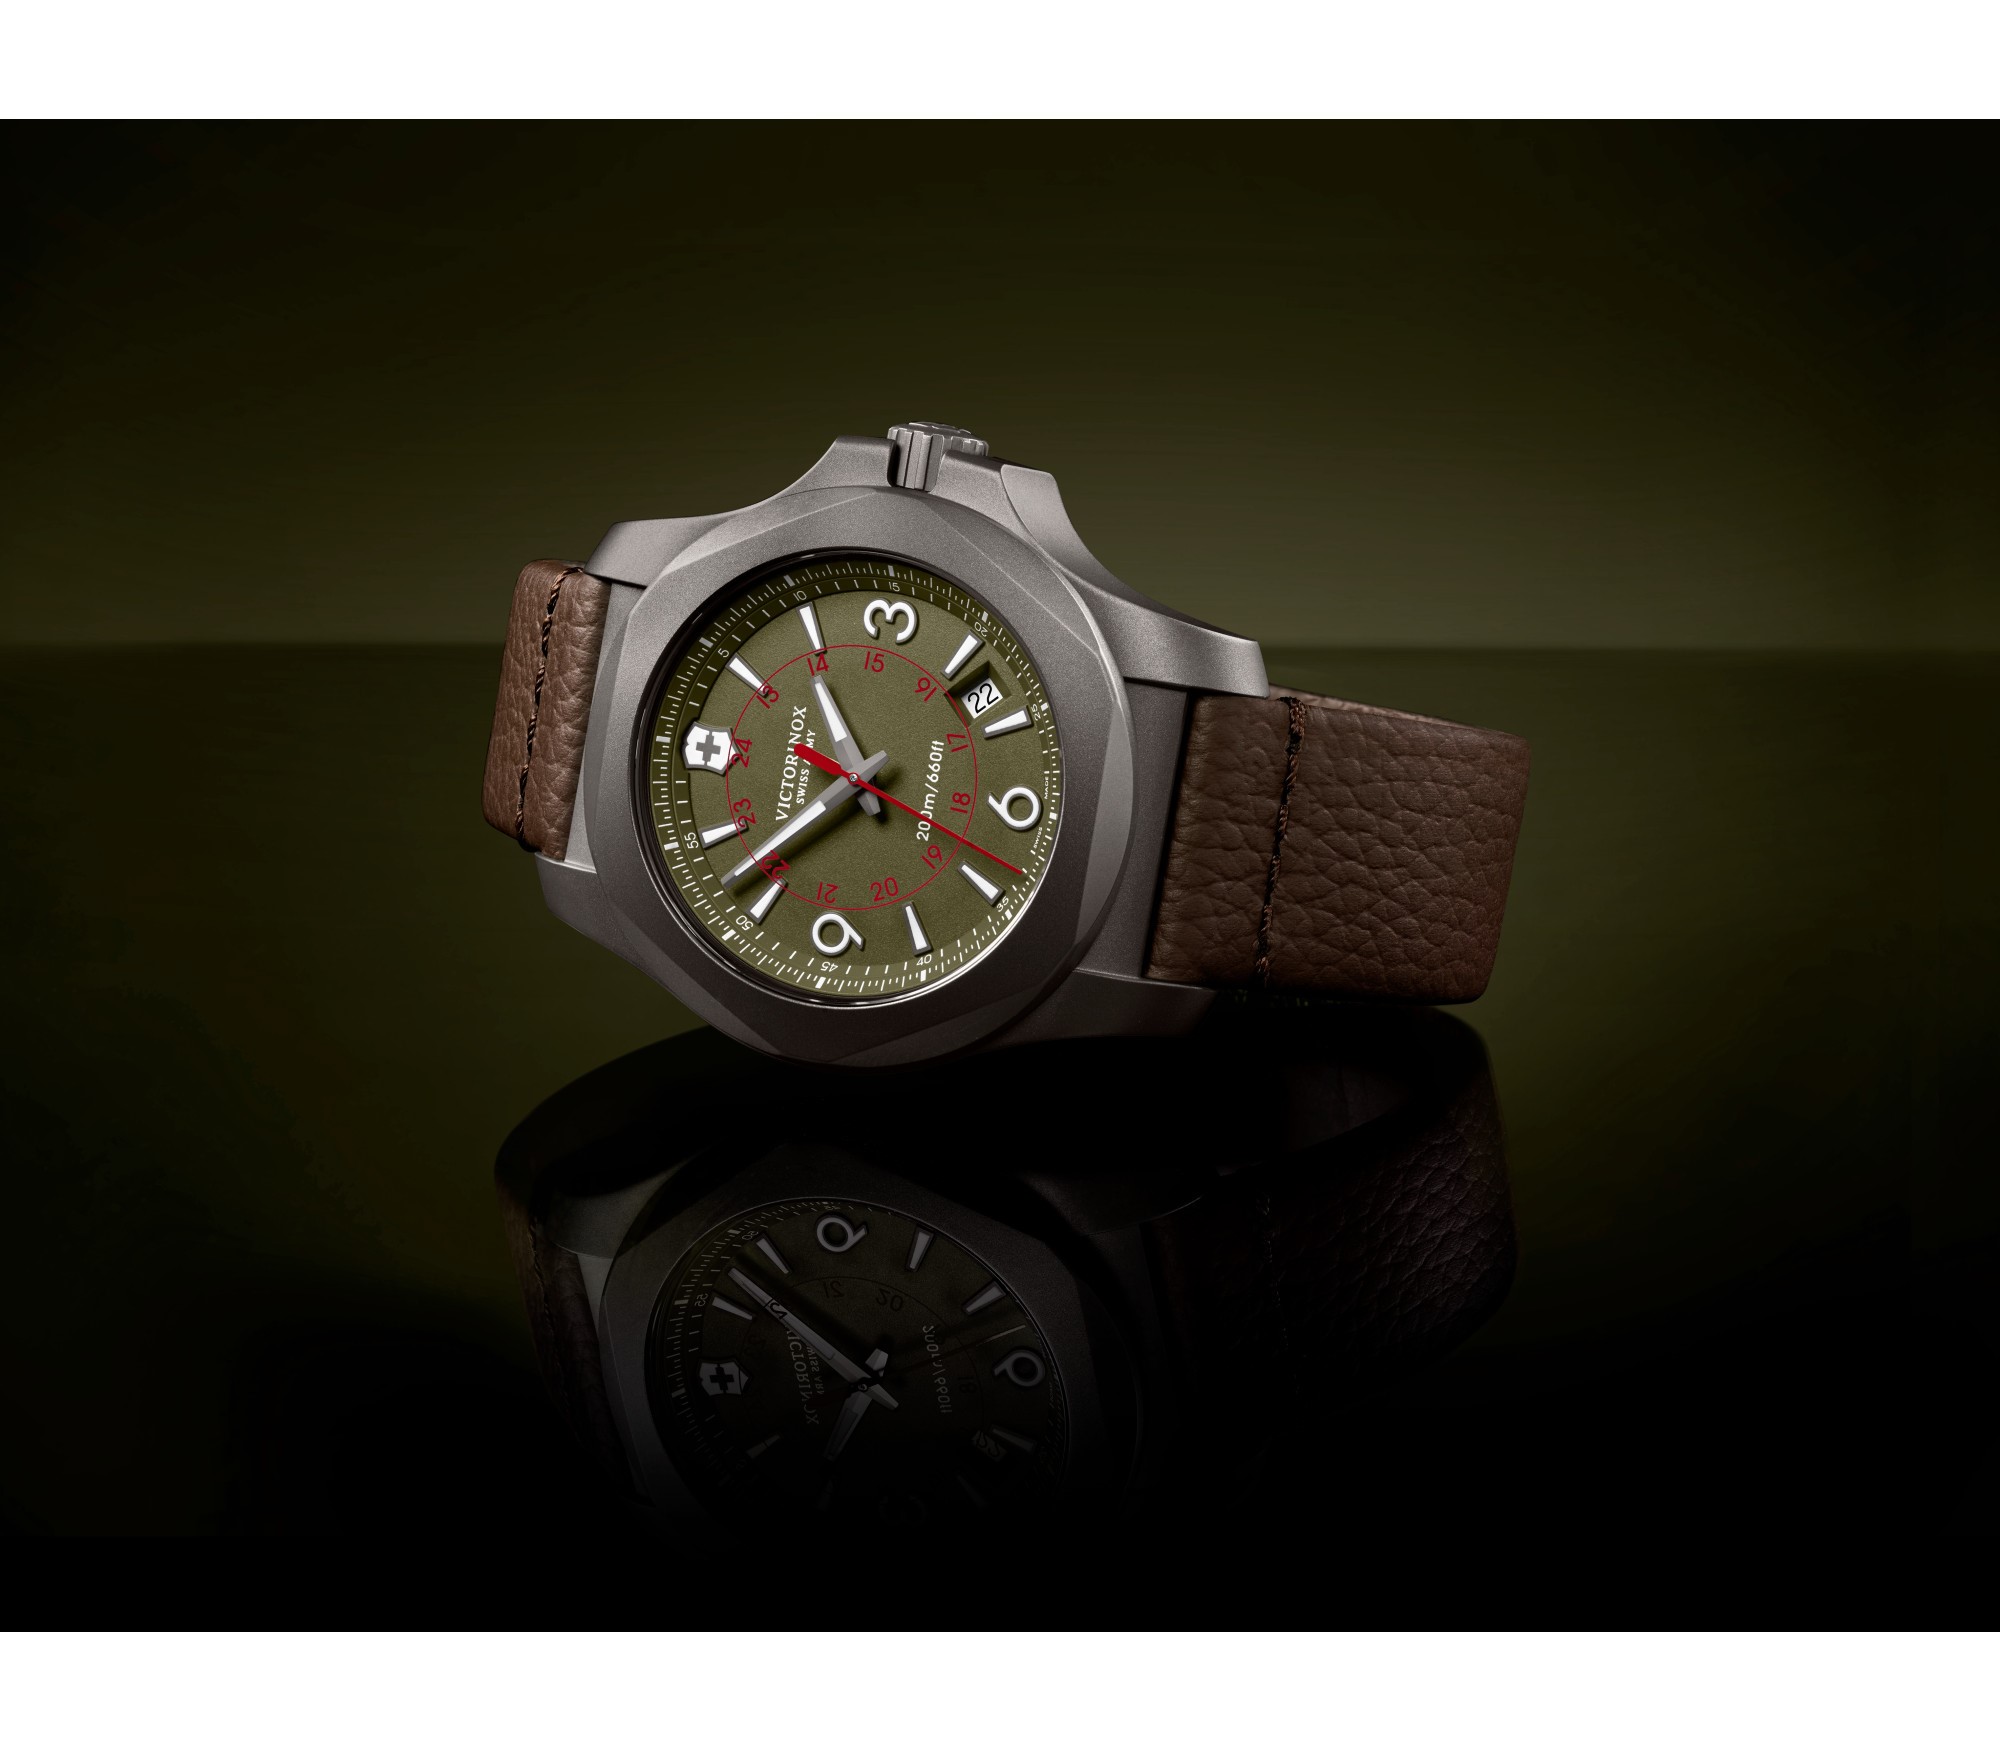  Fanmis “Reginald” Rotatable Bezel Luxury Quartz Watch